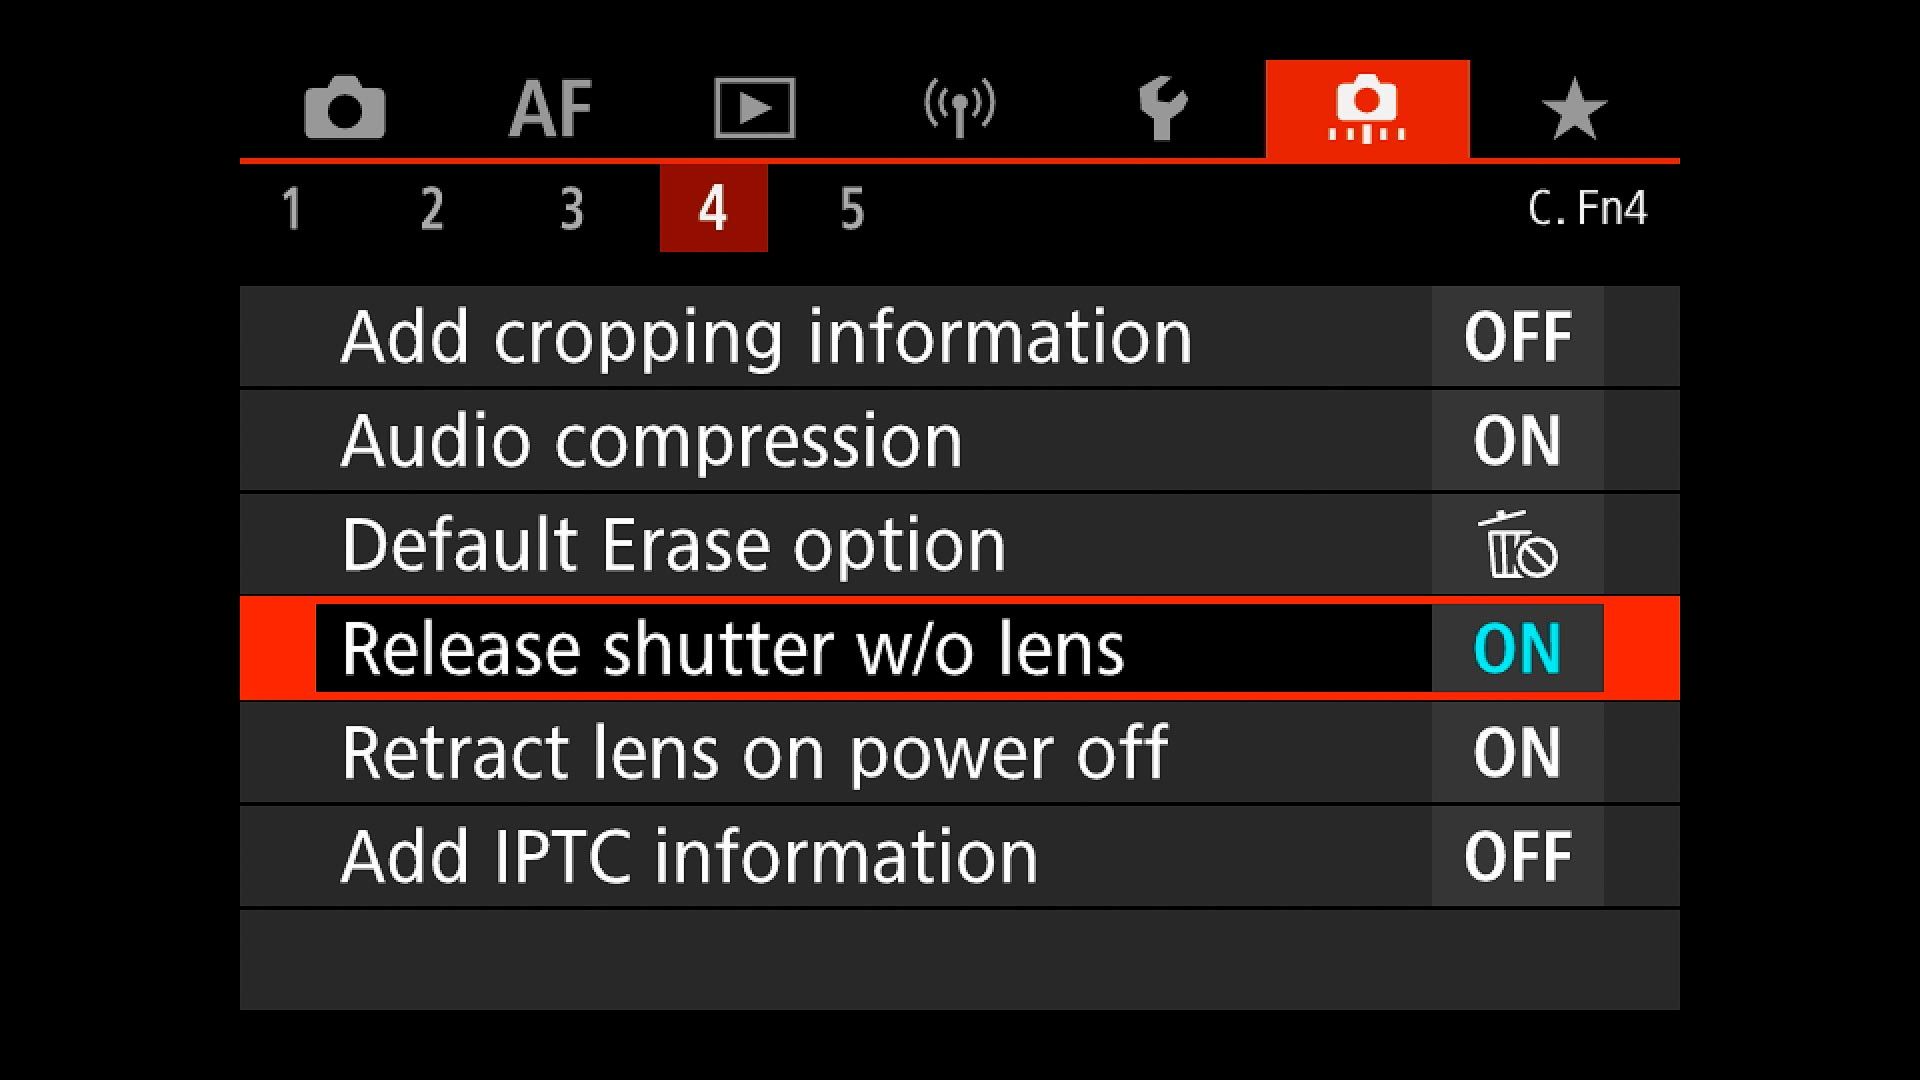 Enabling Release shutter w/o lens on Canon EOS R5